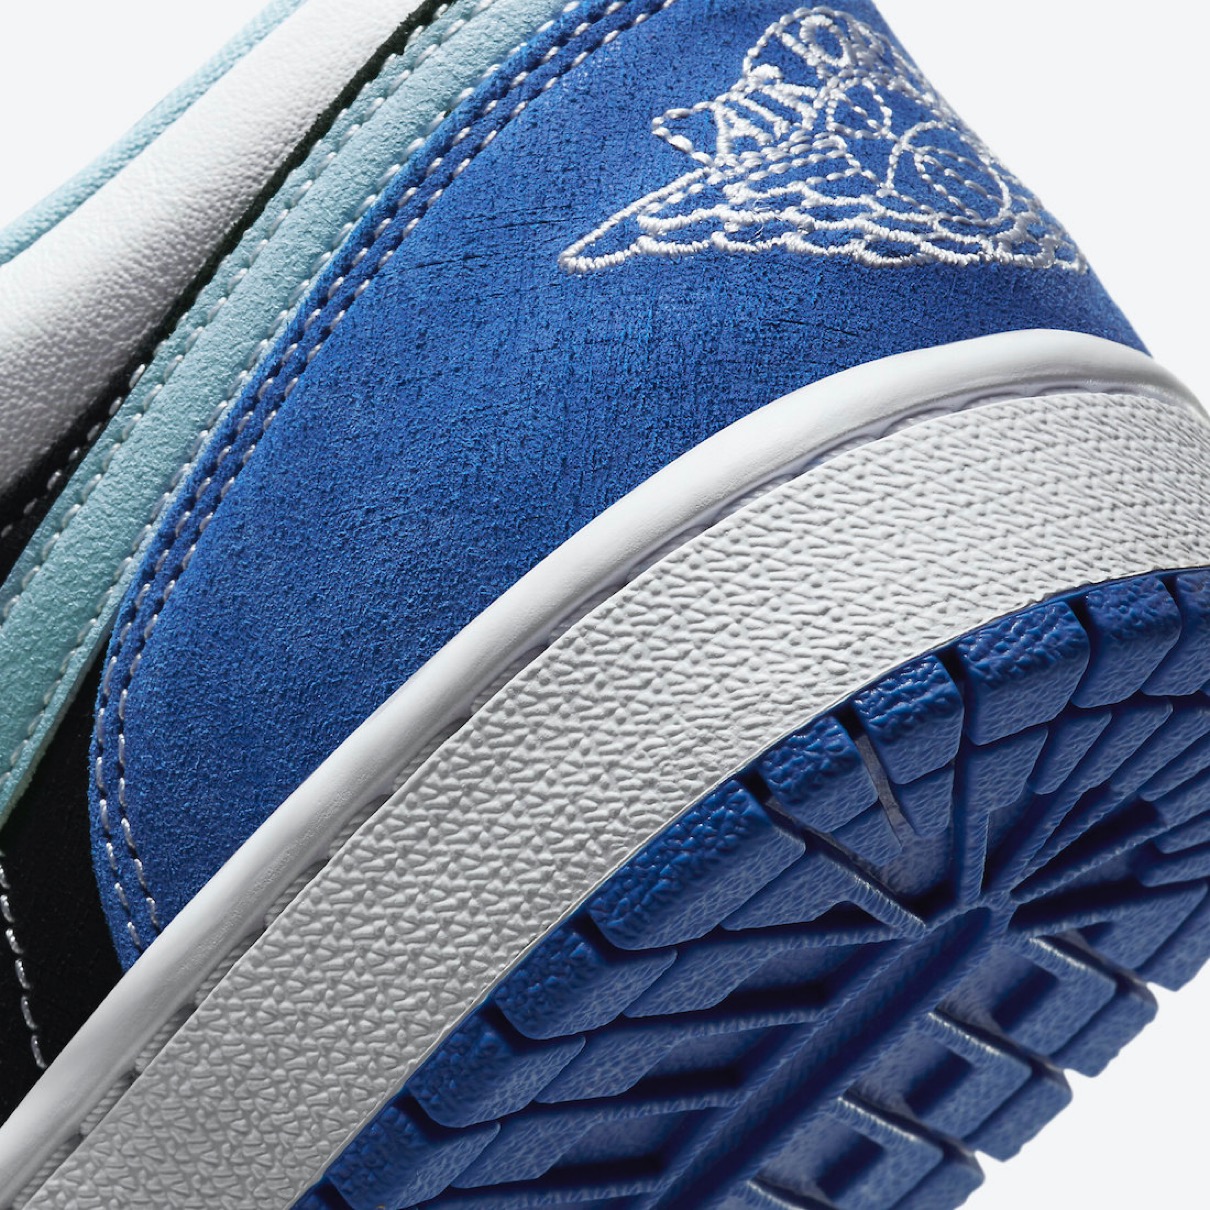 Nike】Air Jordan 1 Low SE “Racer Blue”が国内3月1日に発売予定 | UP ...